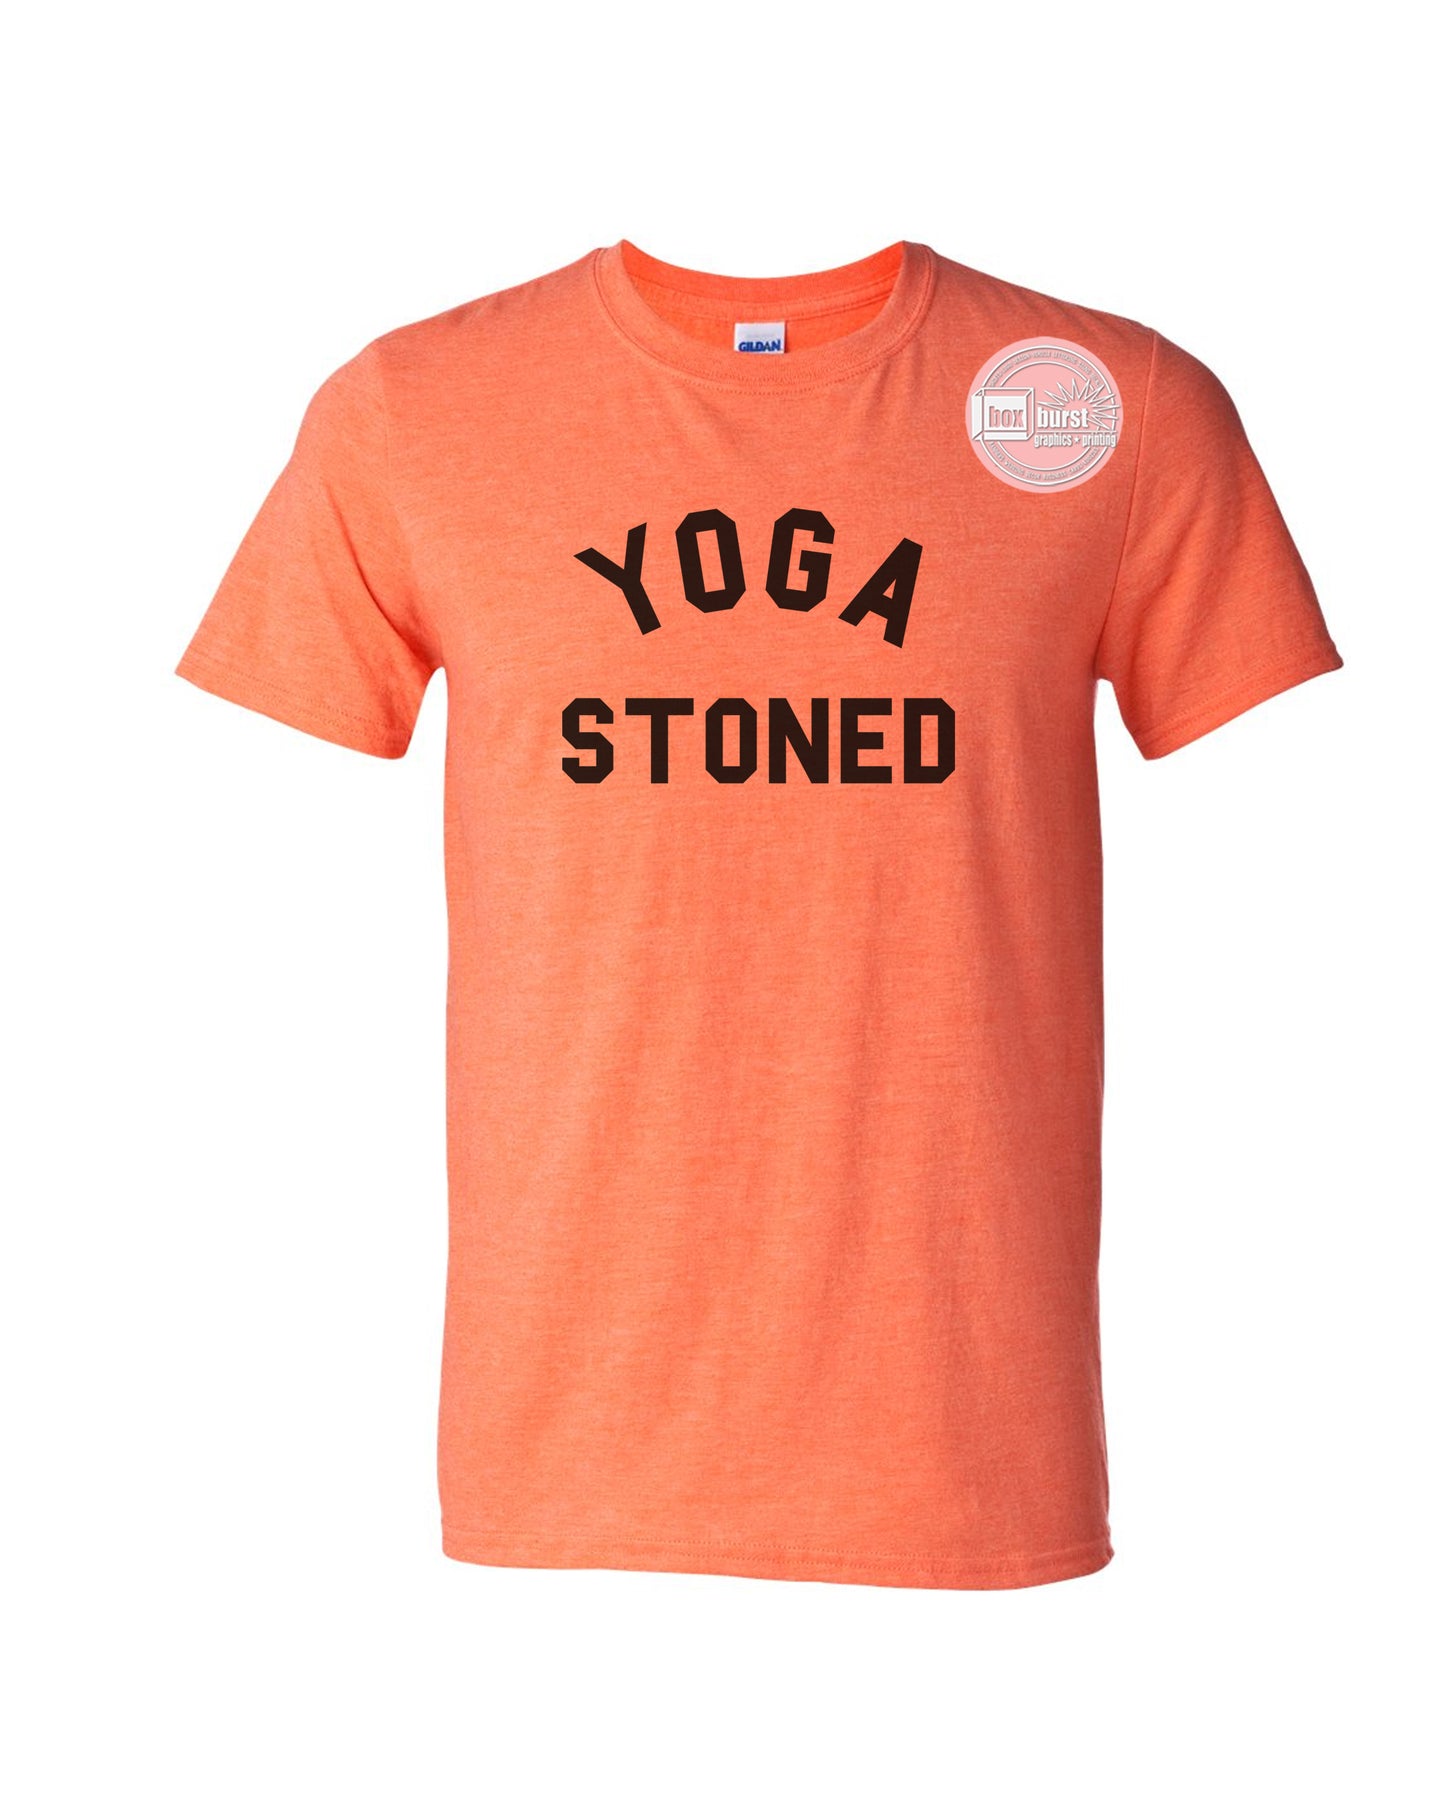 Yoga Stoned t shirt vintage unisex adult soft festival tee